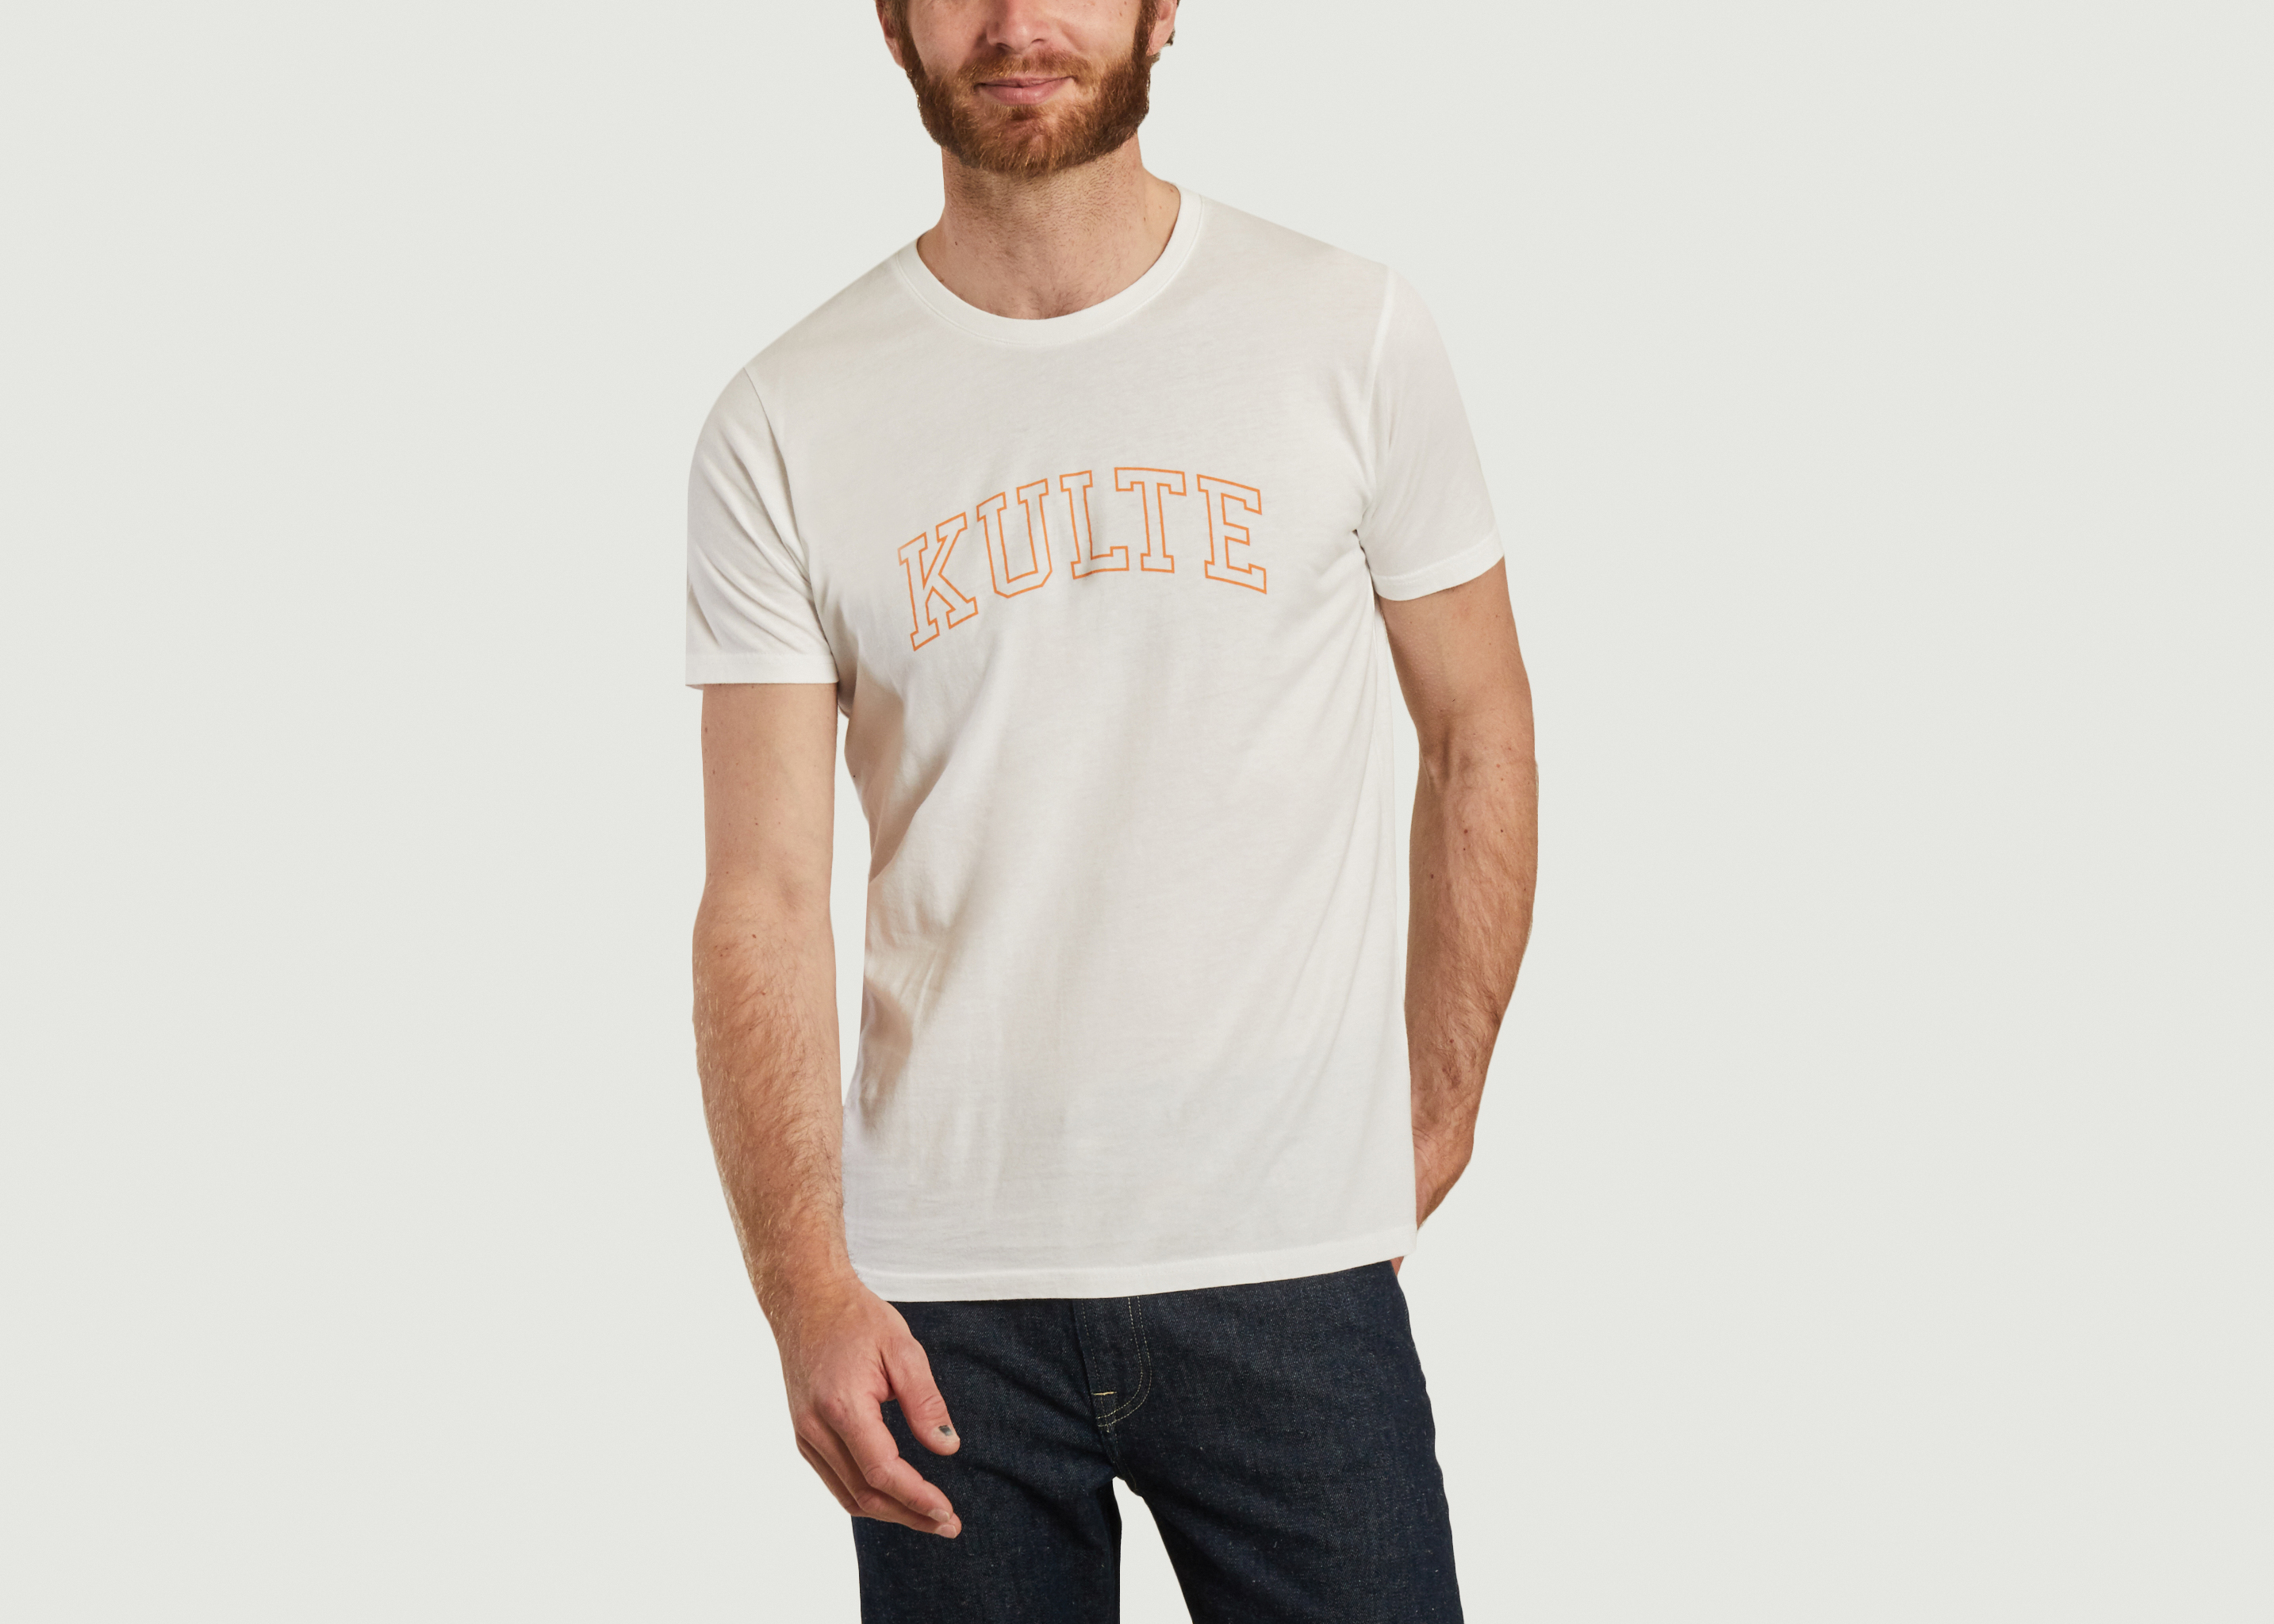 Corpo Athletic T-shirt - Kulte